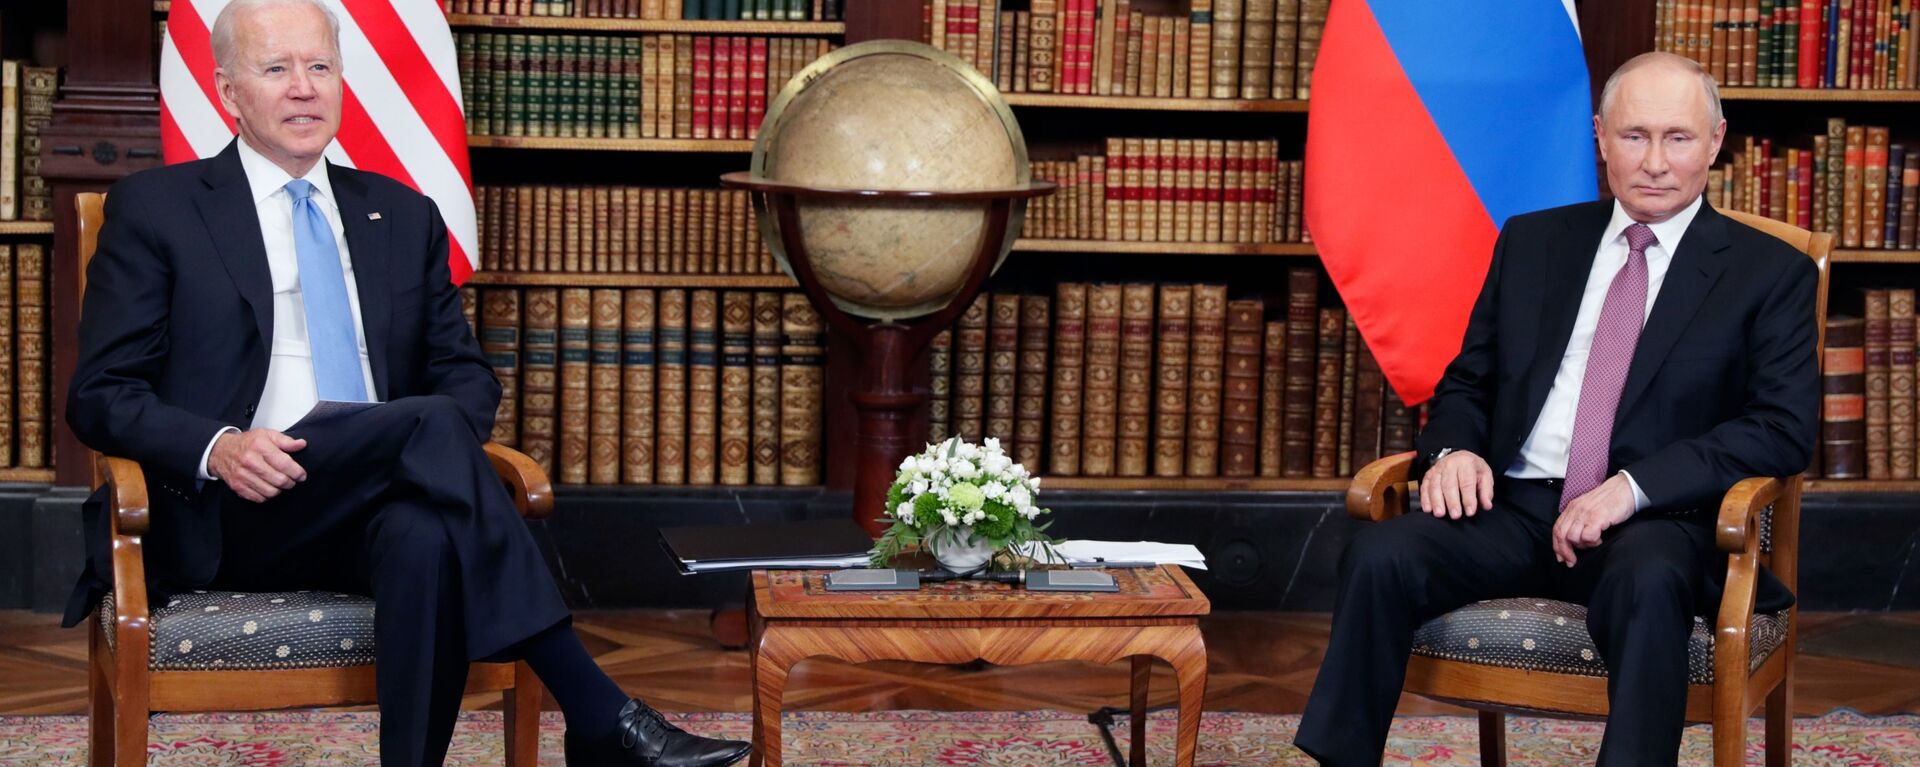 Президент РФ Владимир Путин и президент США Джо Байден во время встречи в Женеве на вилле Ла Гранж - Sputnik Узбекистан, 1920, 17.06.2021